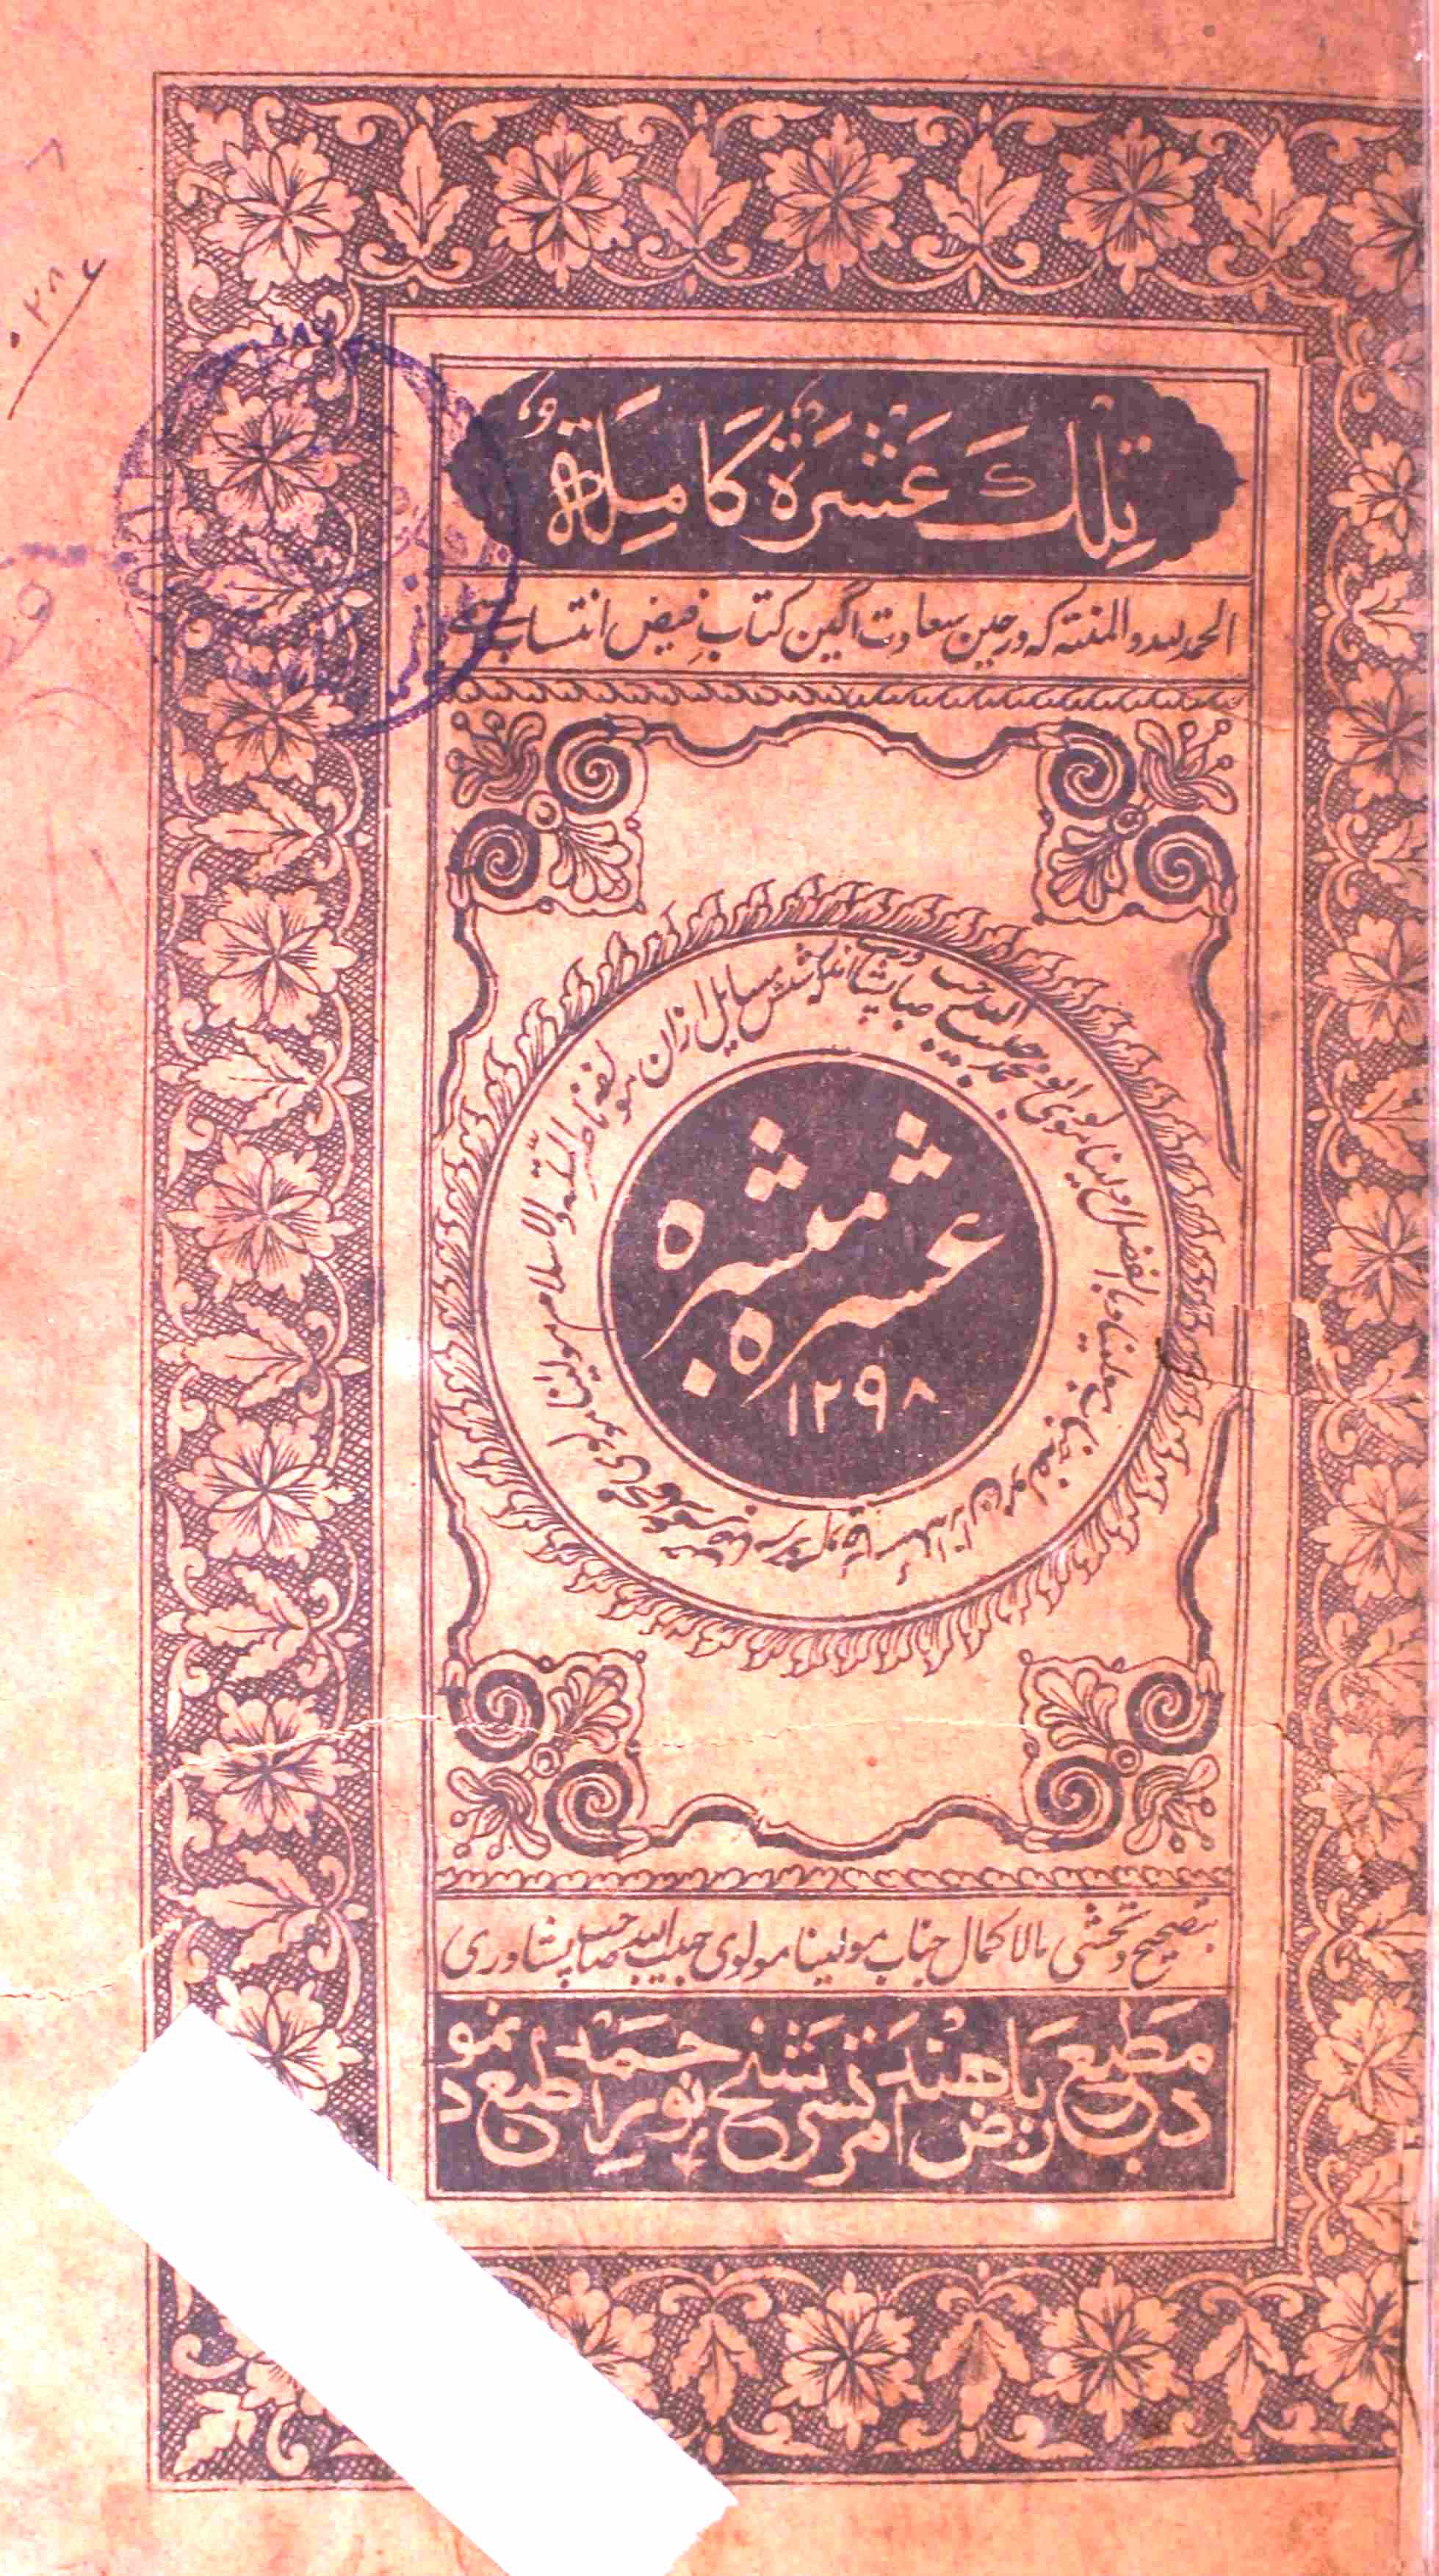 Ashra-e-Mubashshira